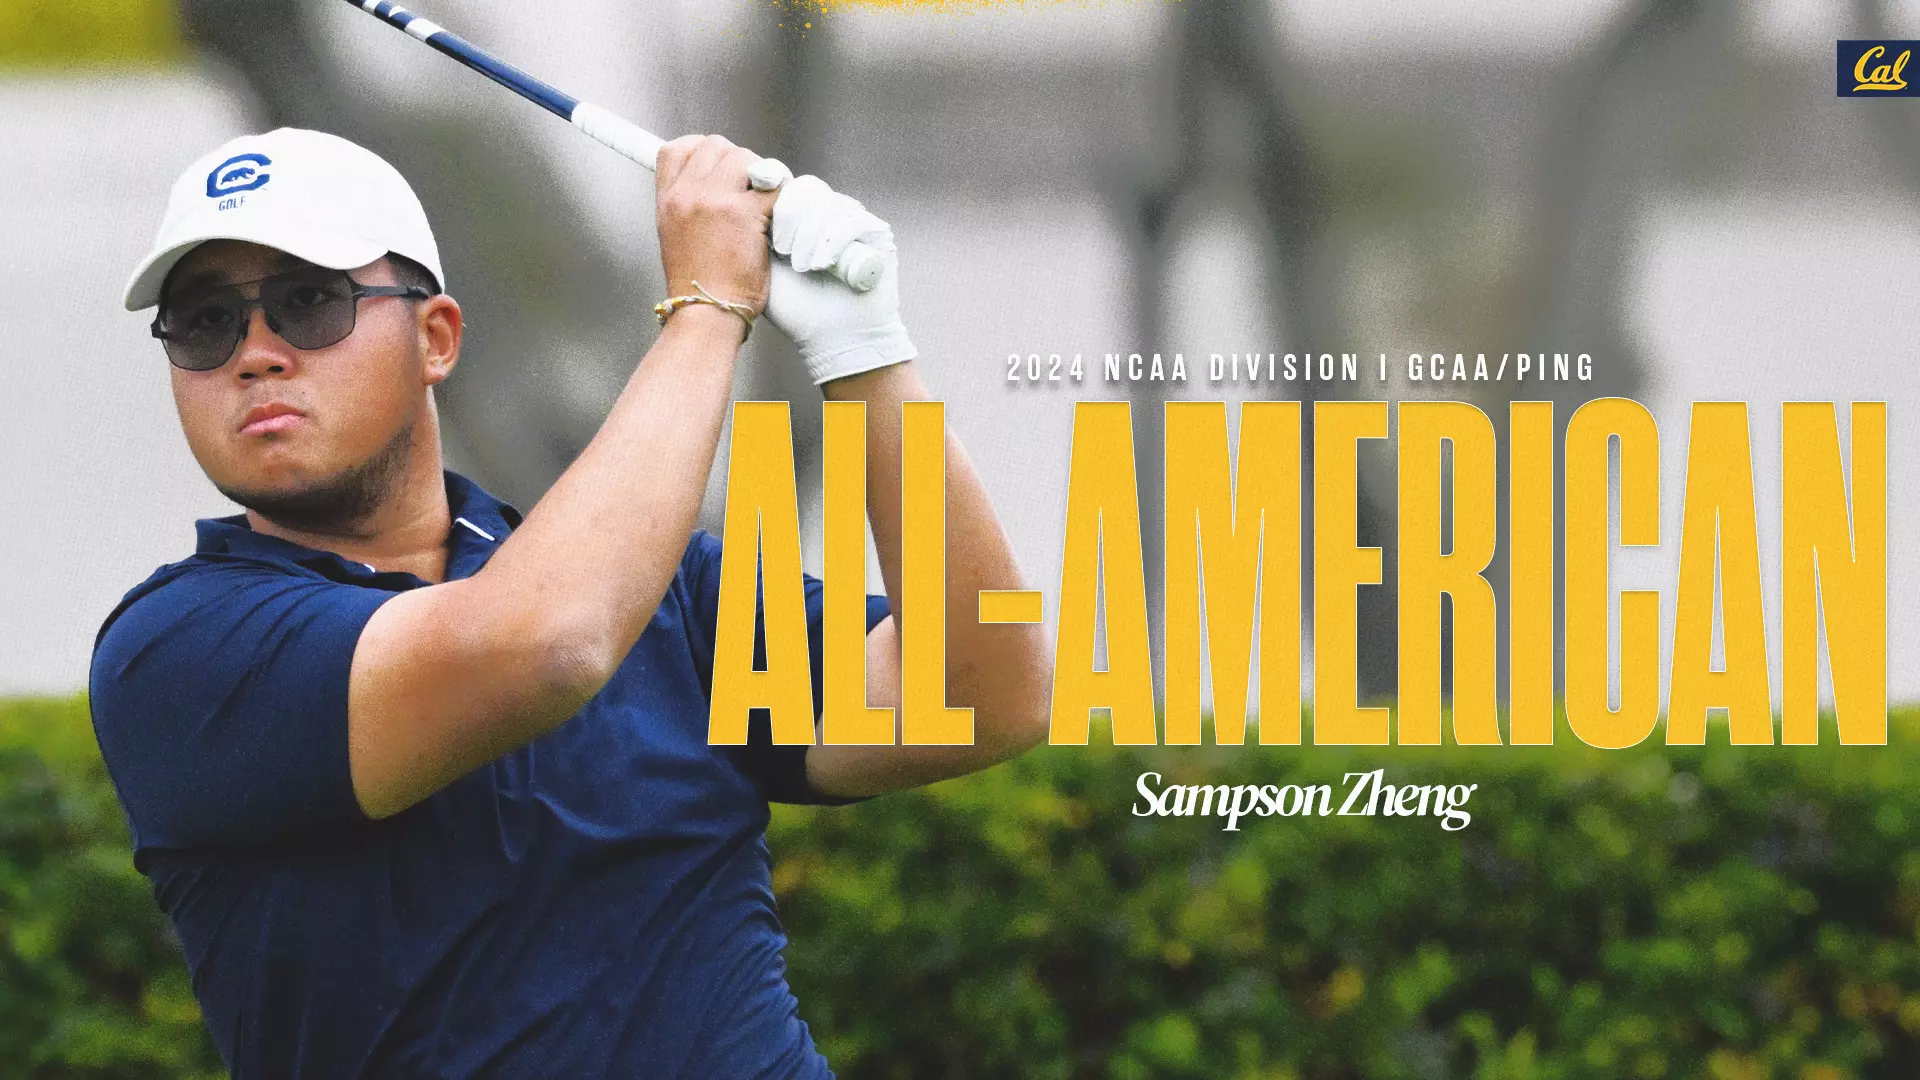 Sampson Zheng Repeats As All-American